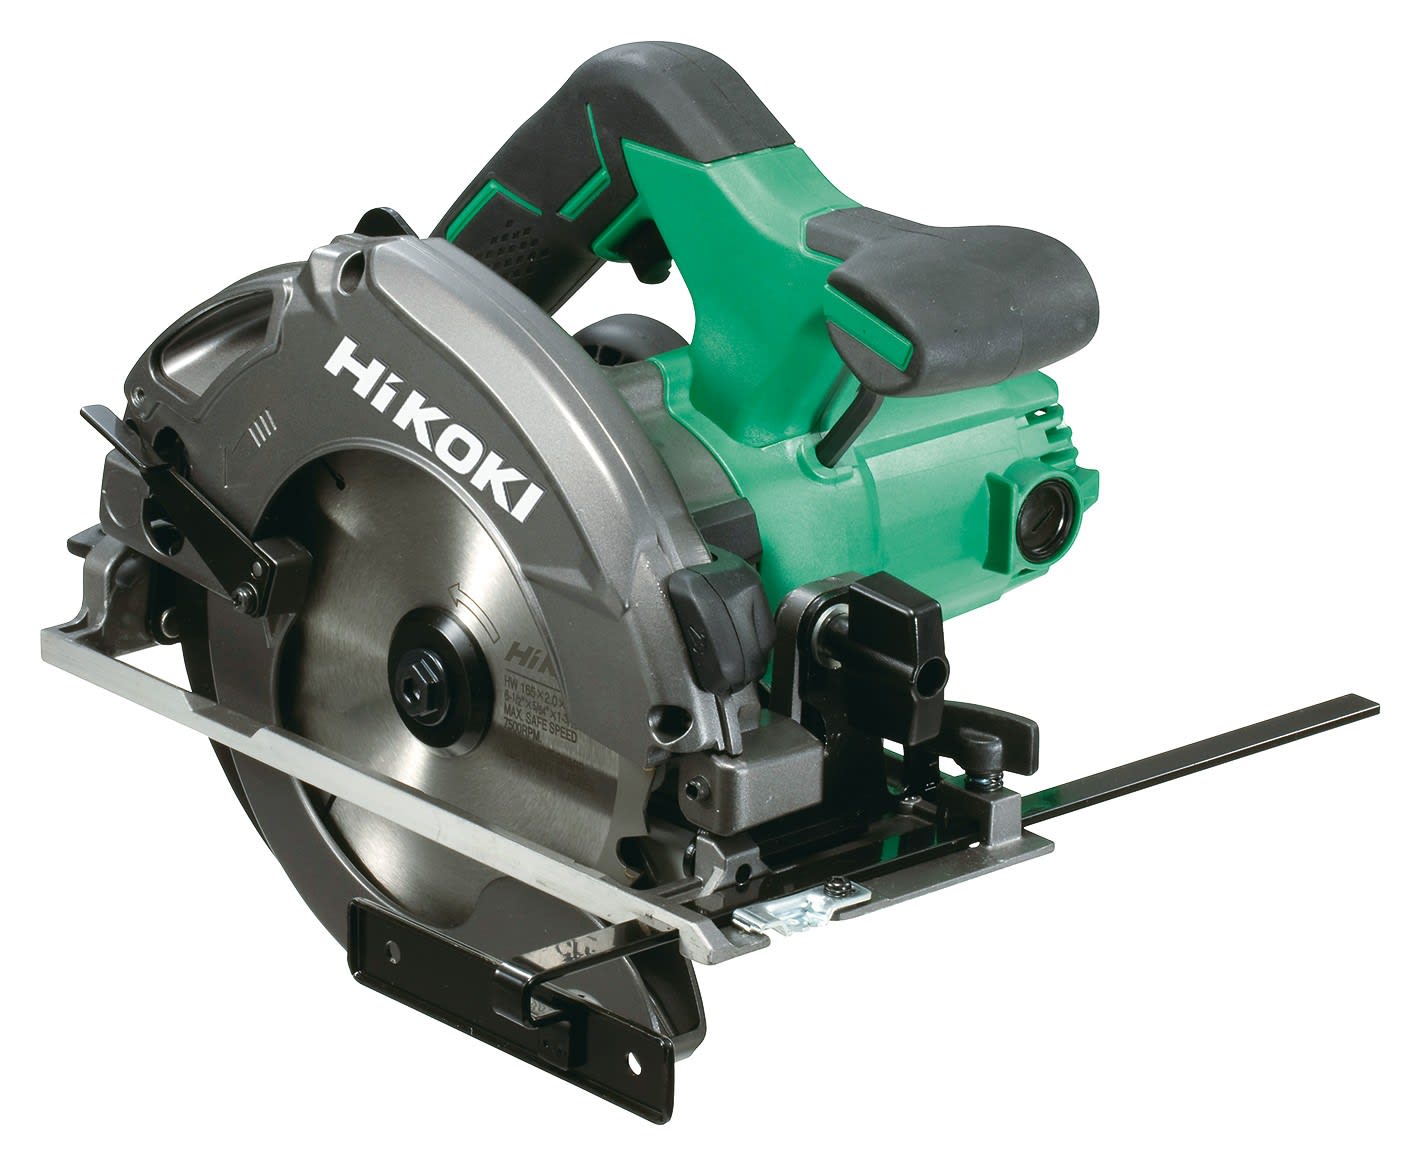 Hikoki Power Tools - Scie circulaire Ø165mm cap.54mm 1300W vit. à vide 5800tr/min alés. 30mm, coffret